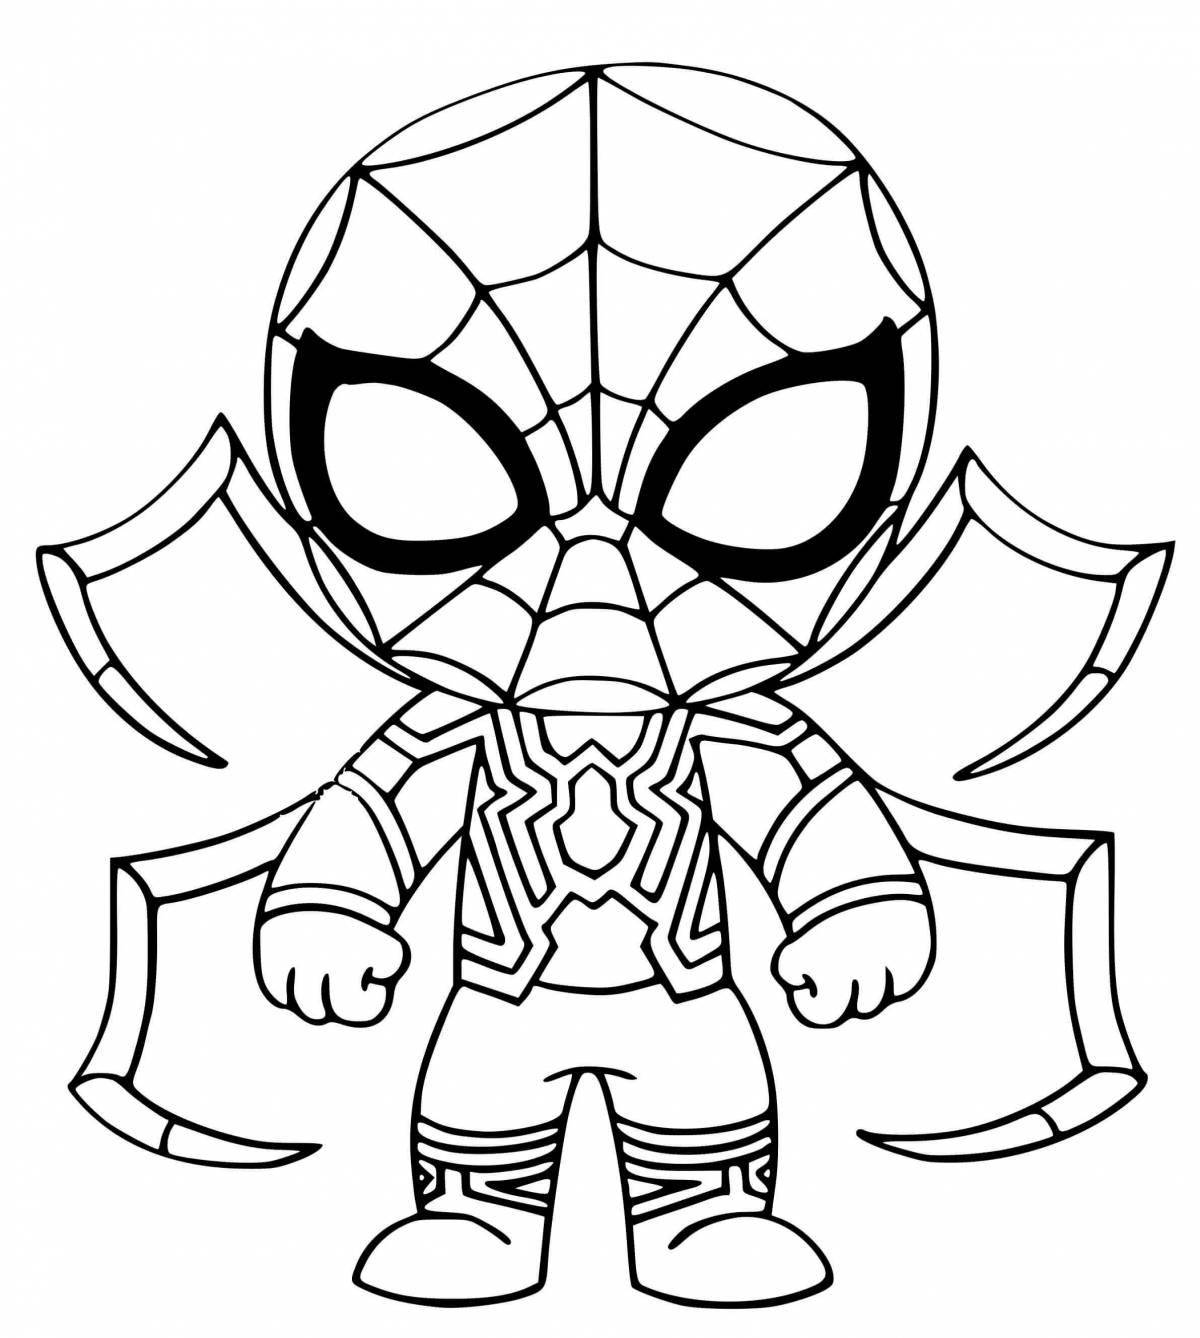 Spider-man creative coloring book for preschoolers